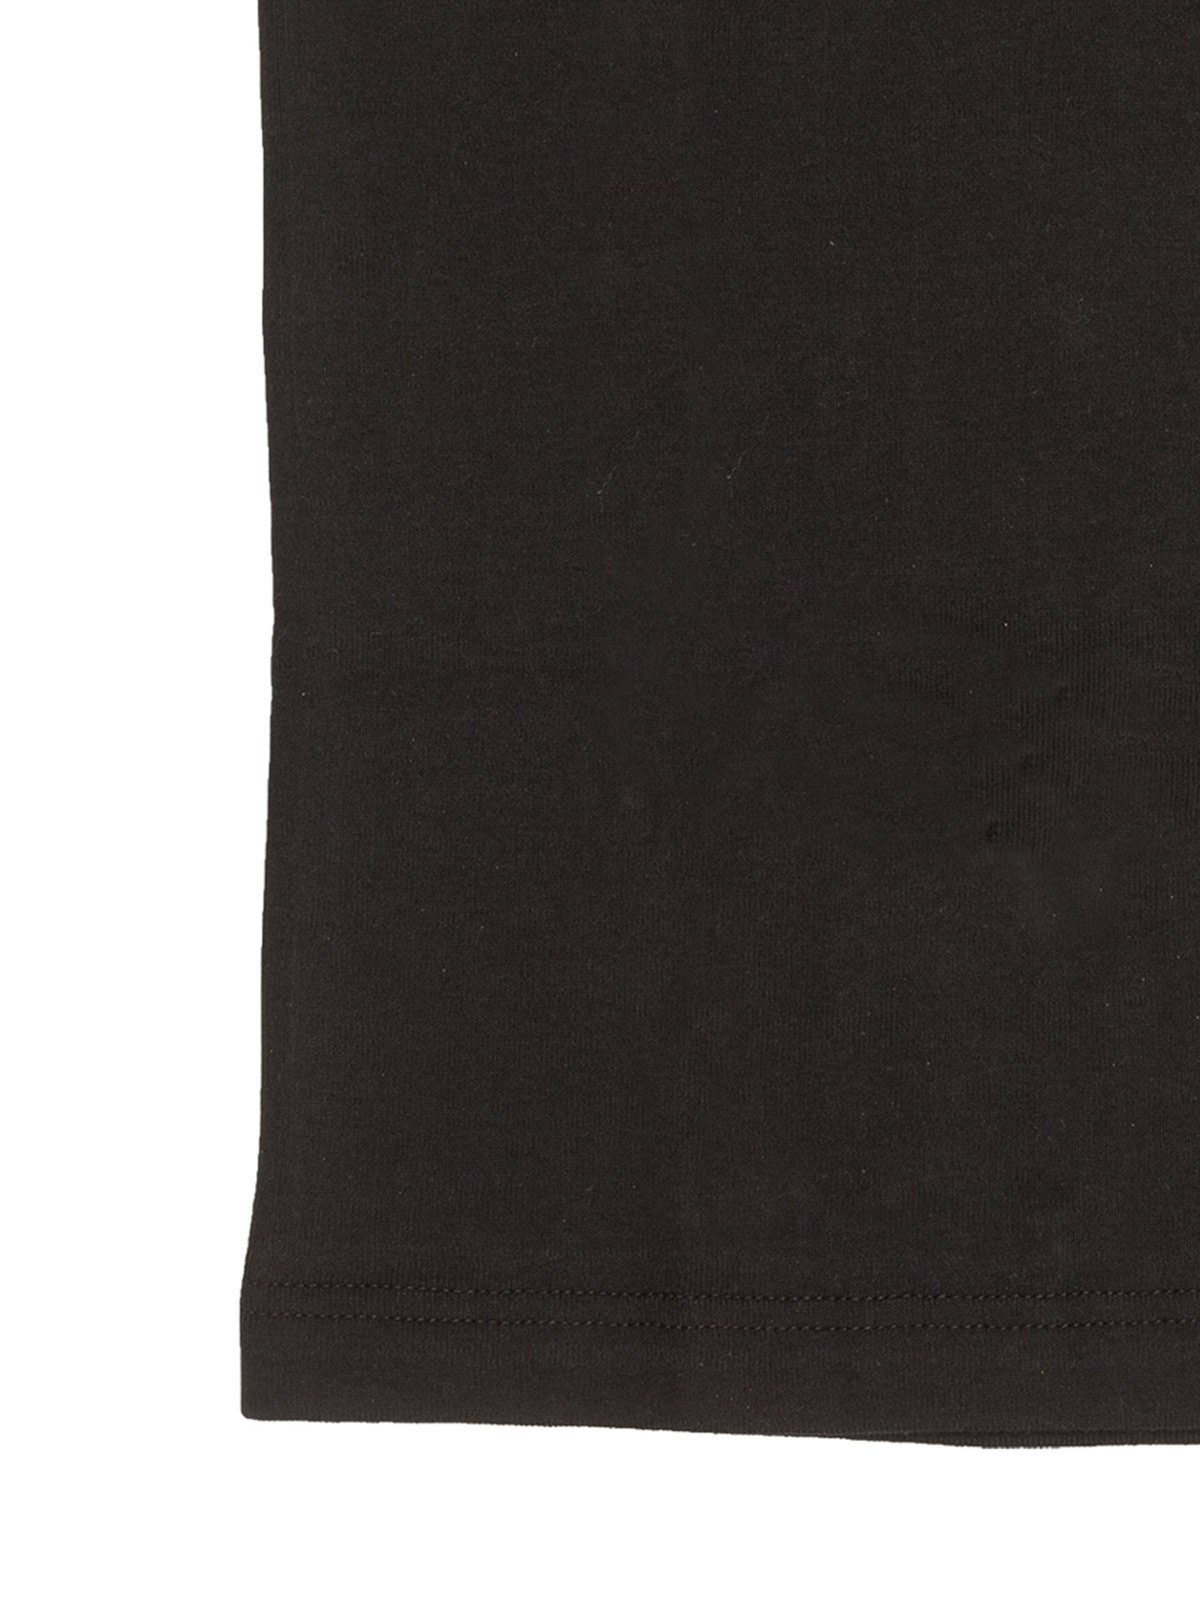 hohe Markenqualität Achselhemd (Stück, Unterhemd schwarz Feinripp Sweety 1-St) for Knaben Kids